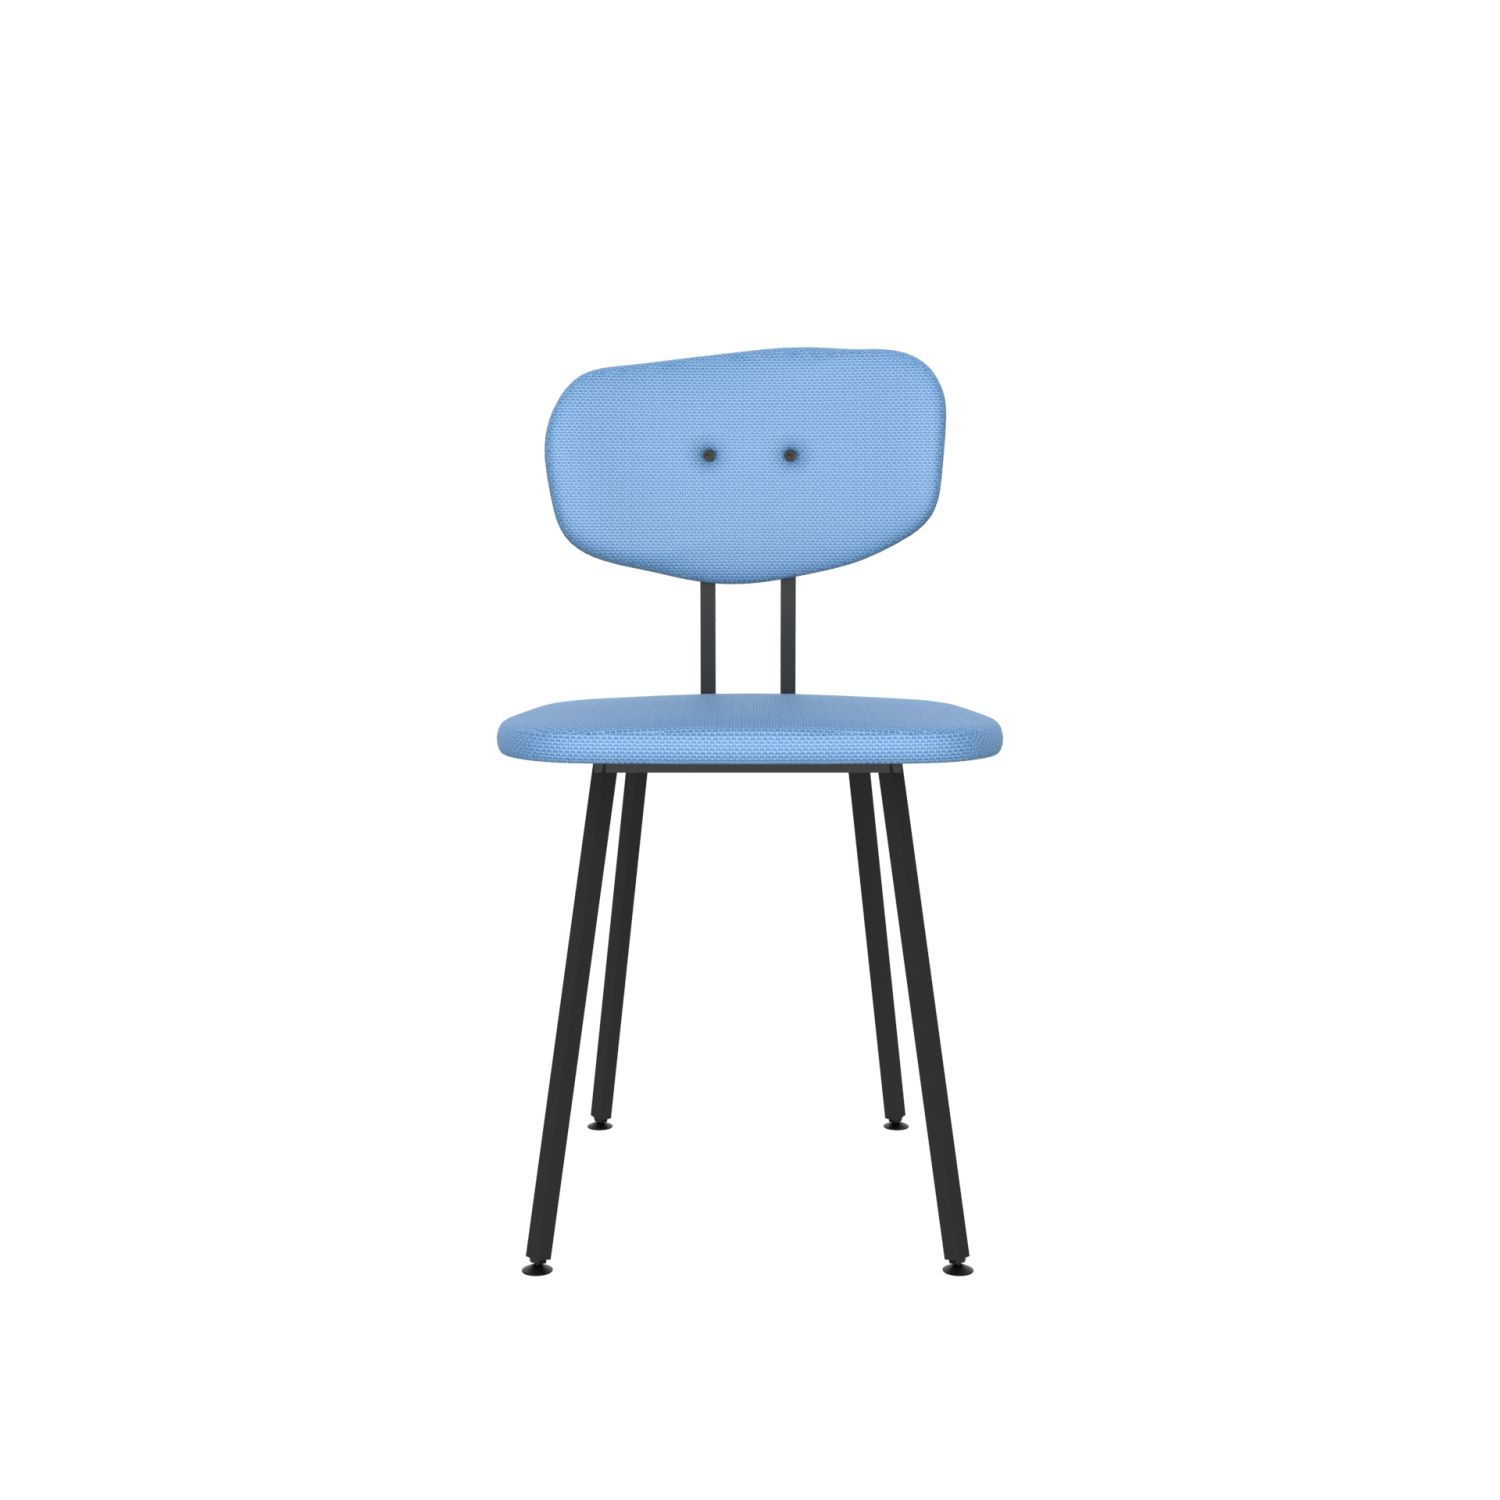 lensvelt maarten baas chair 101 not stackable without armrests backrest c blue horizon 040 black ral9005 hard leg ends